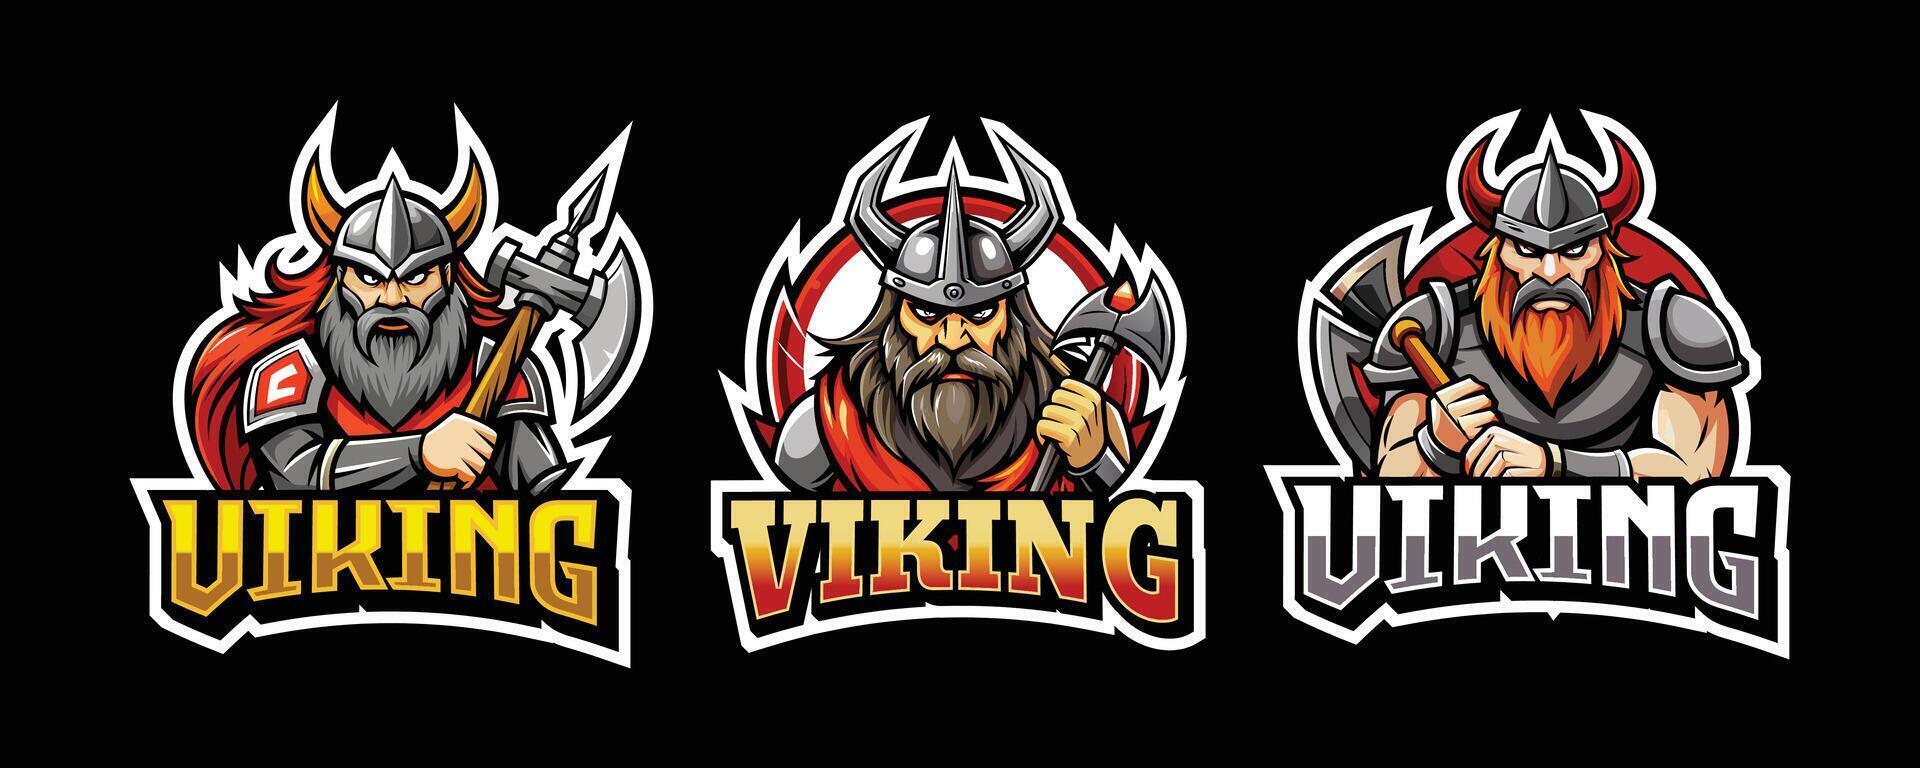 viking esport gaming logo. set of viking mascot design vector